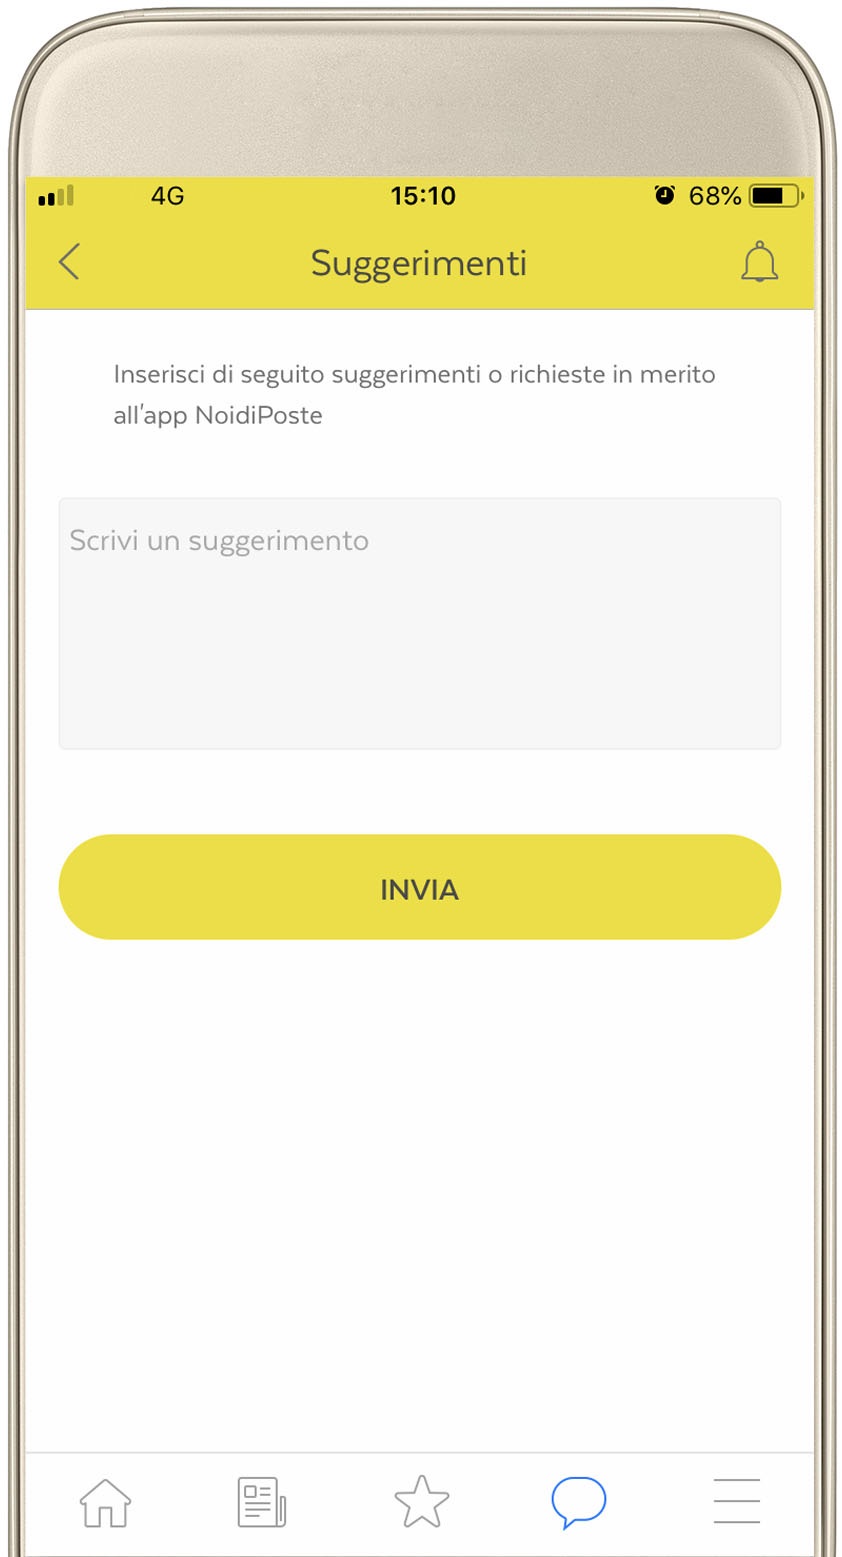 Intranet-App-poste-italiane-NoiDiPoste